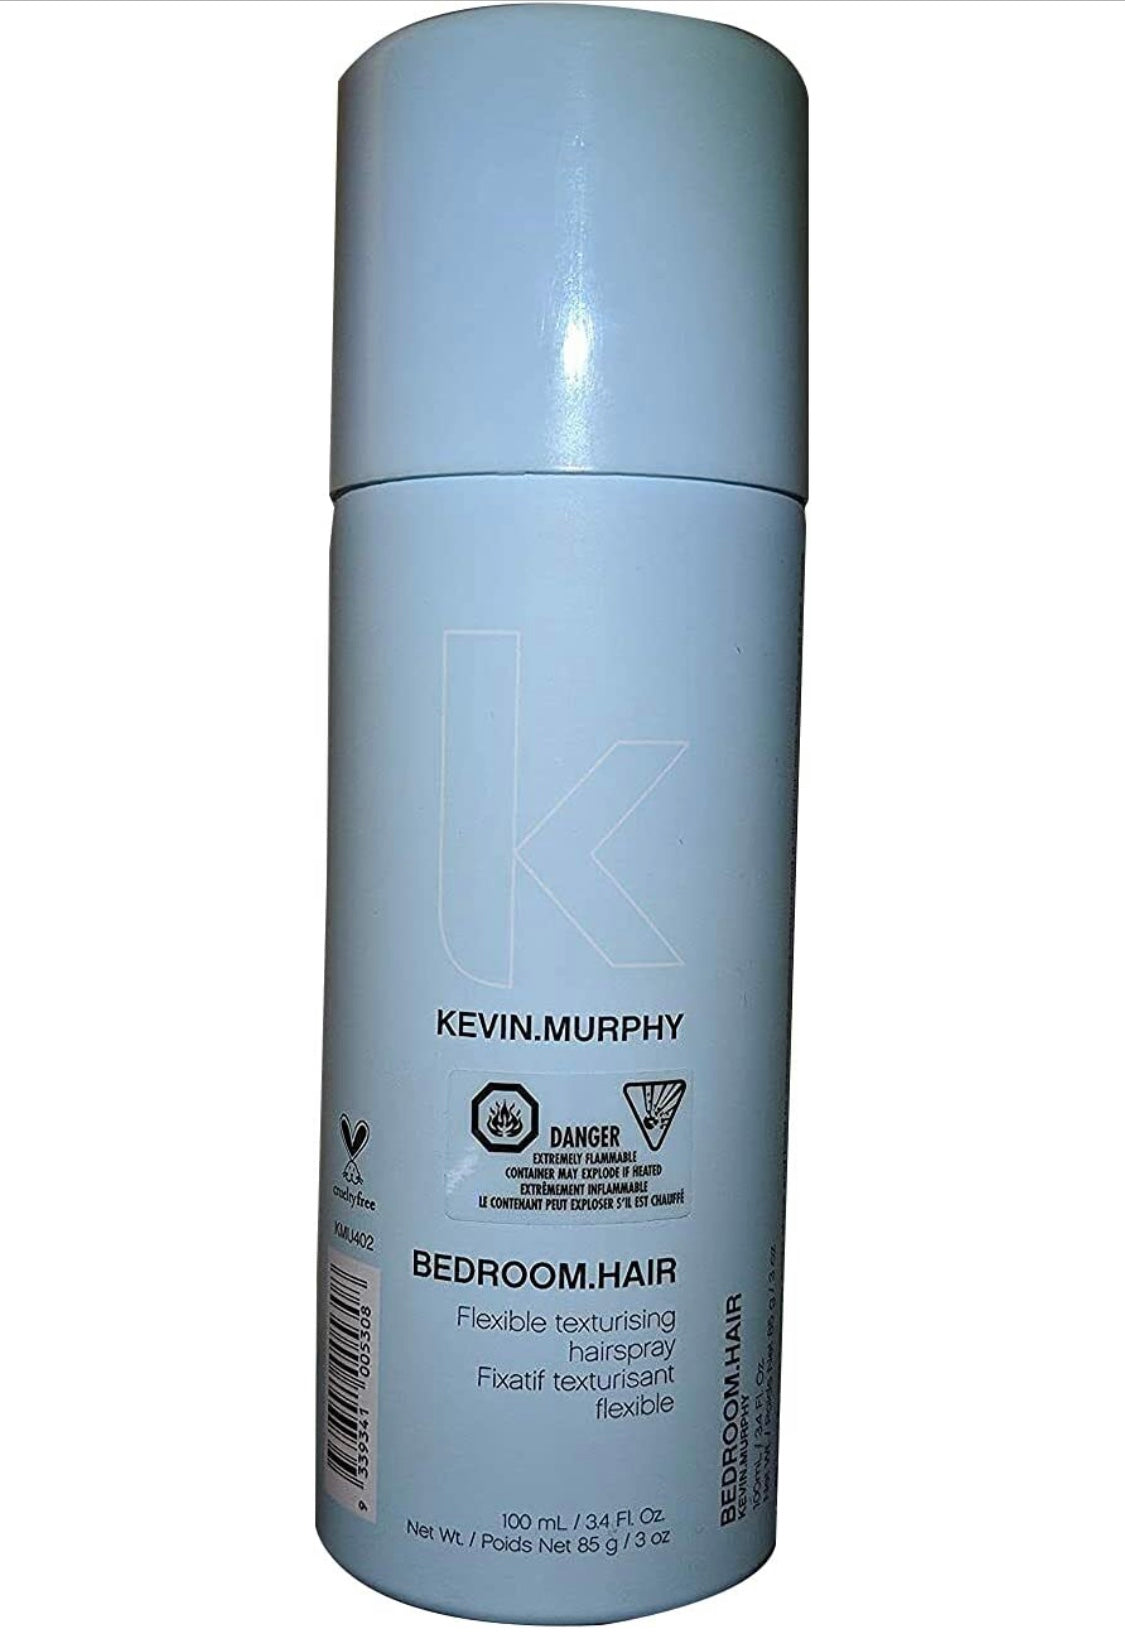 Kevin.Murphy - Bedroom.Hair  3.4 fl. oz. / 100 ml